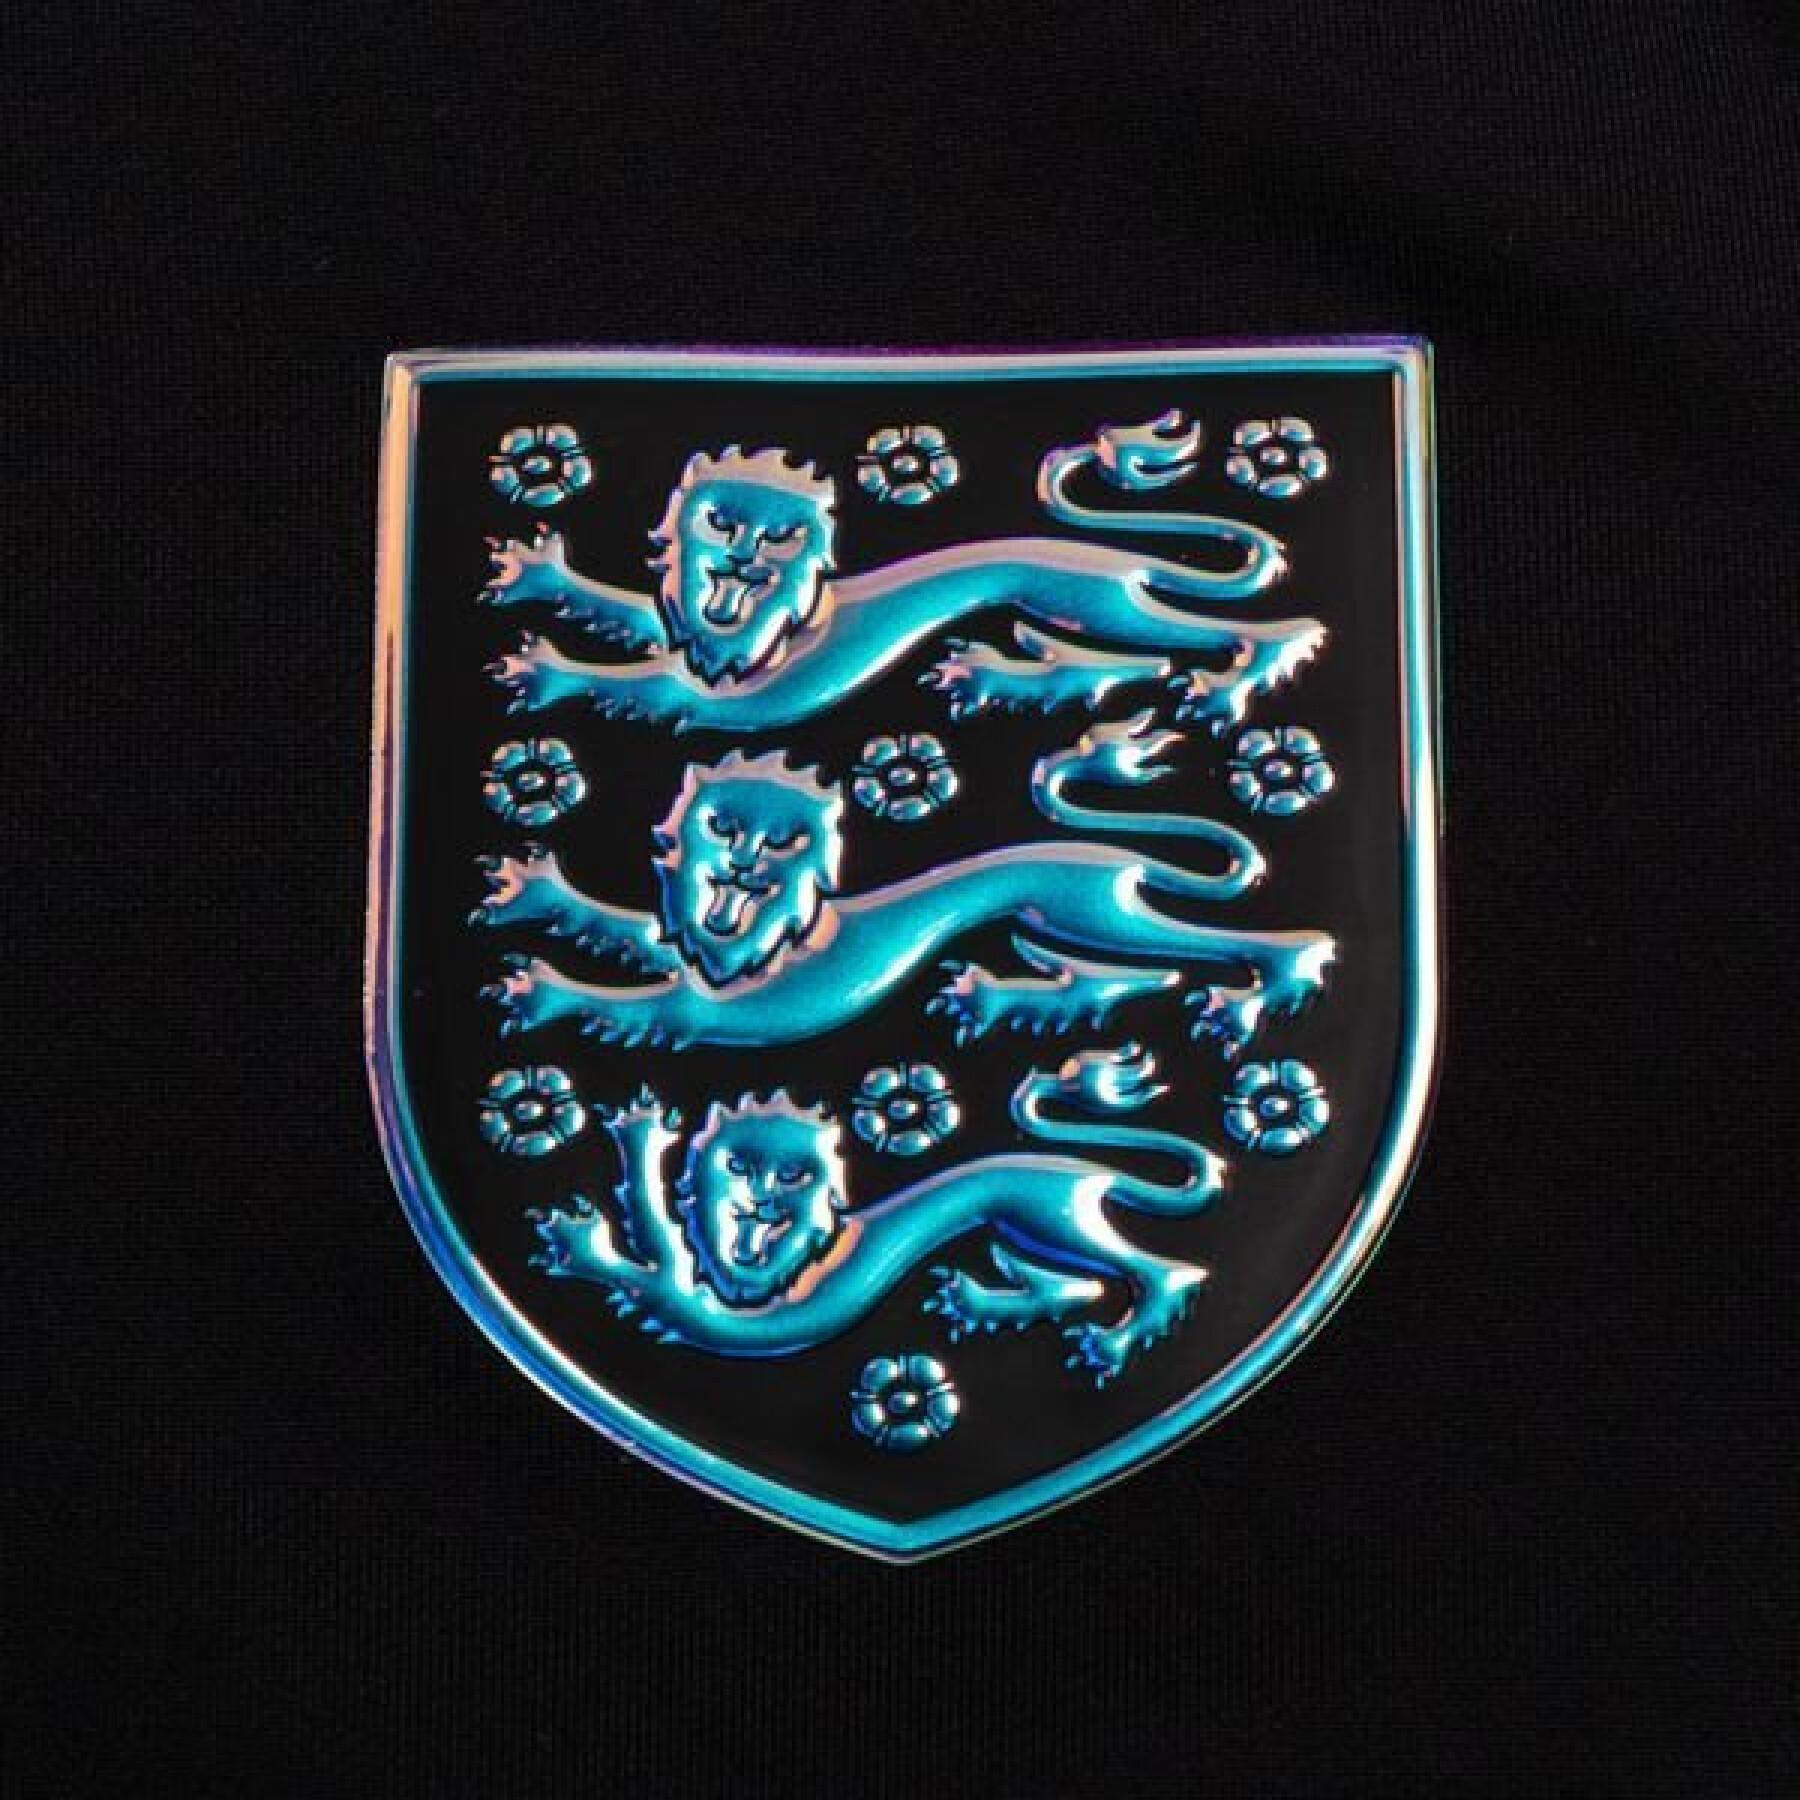 Camiseta infantil Angleterre Dri-FIT Strike Dril 2022/23